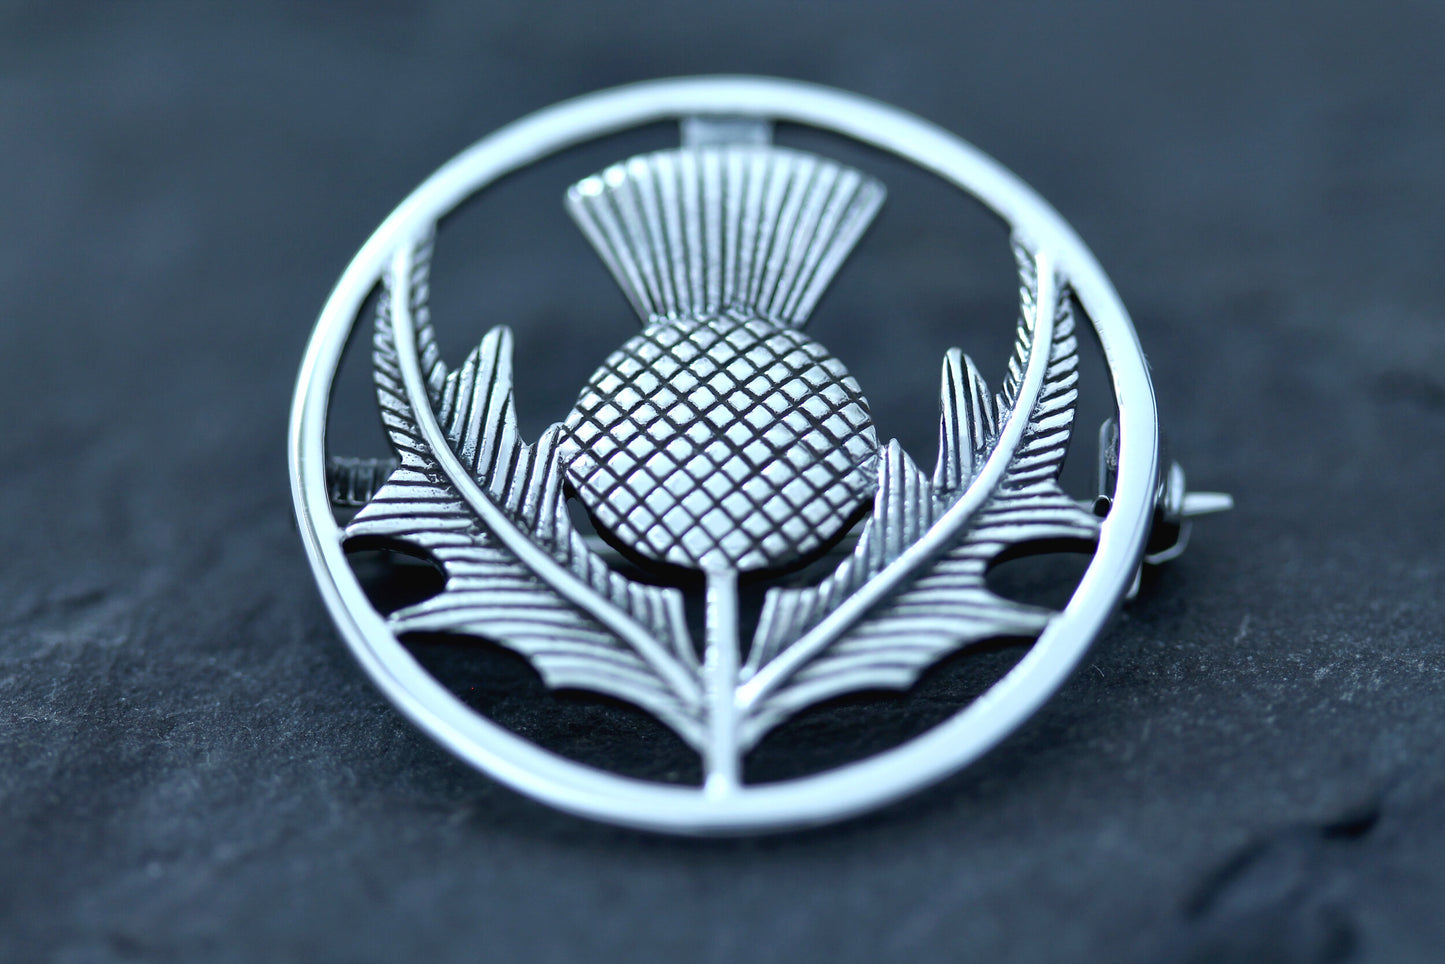 Scottish Thistle Brooch - Statement Emblem